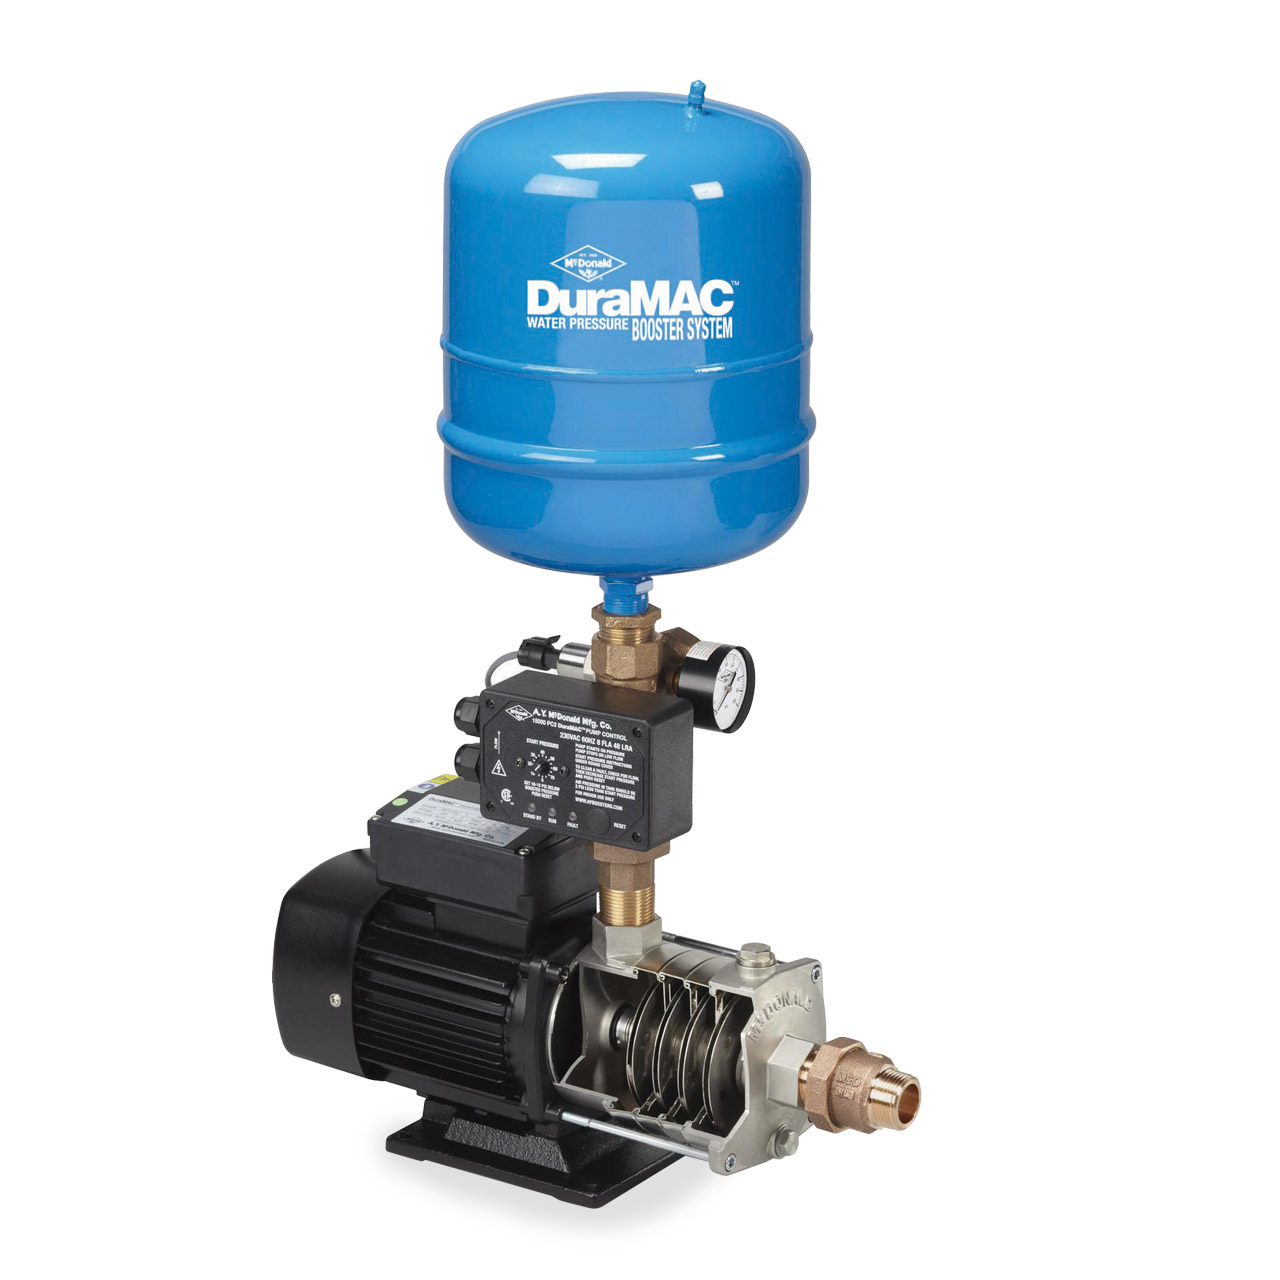 DuraMAC Residential Pressure Booster | AY McDonald Booster Pump